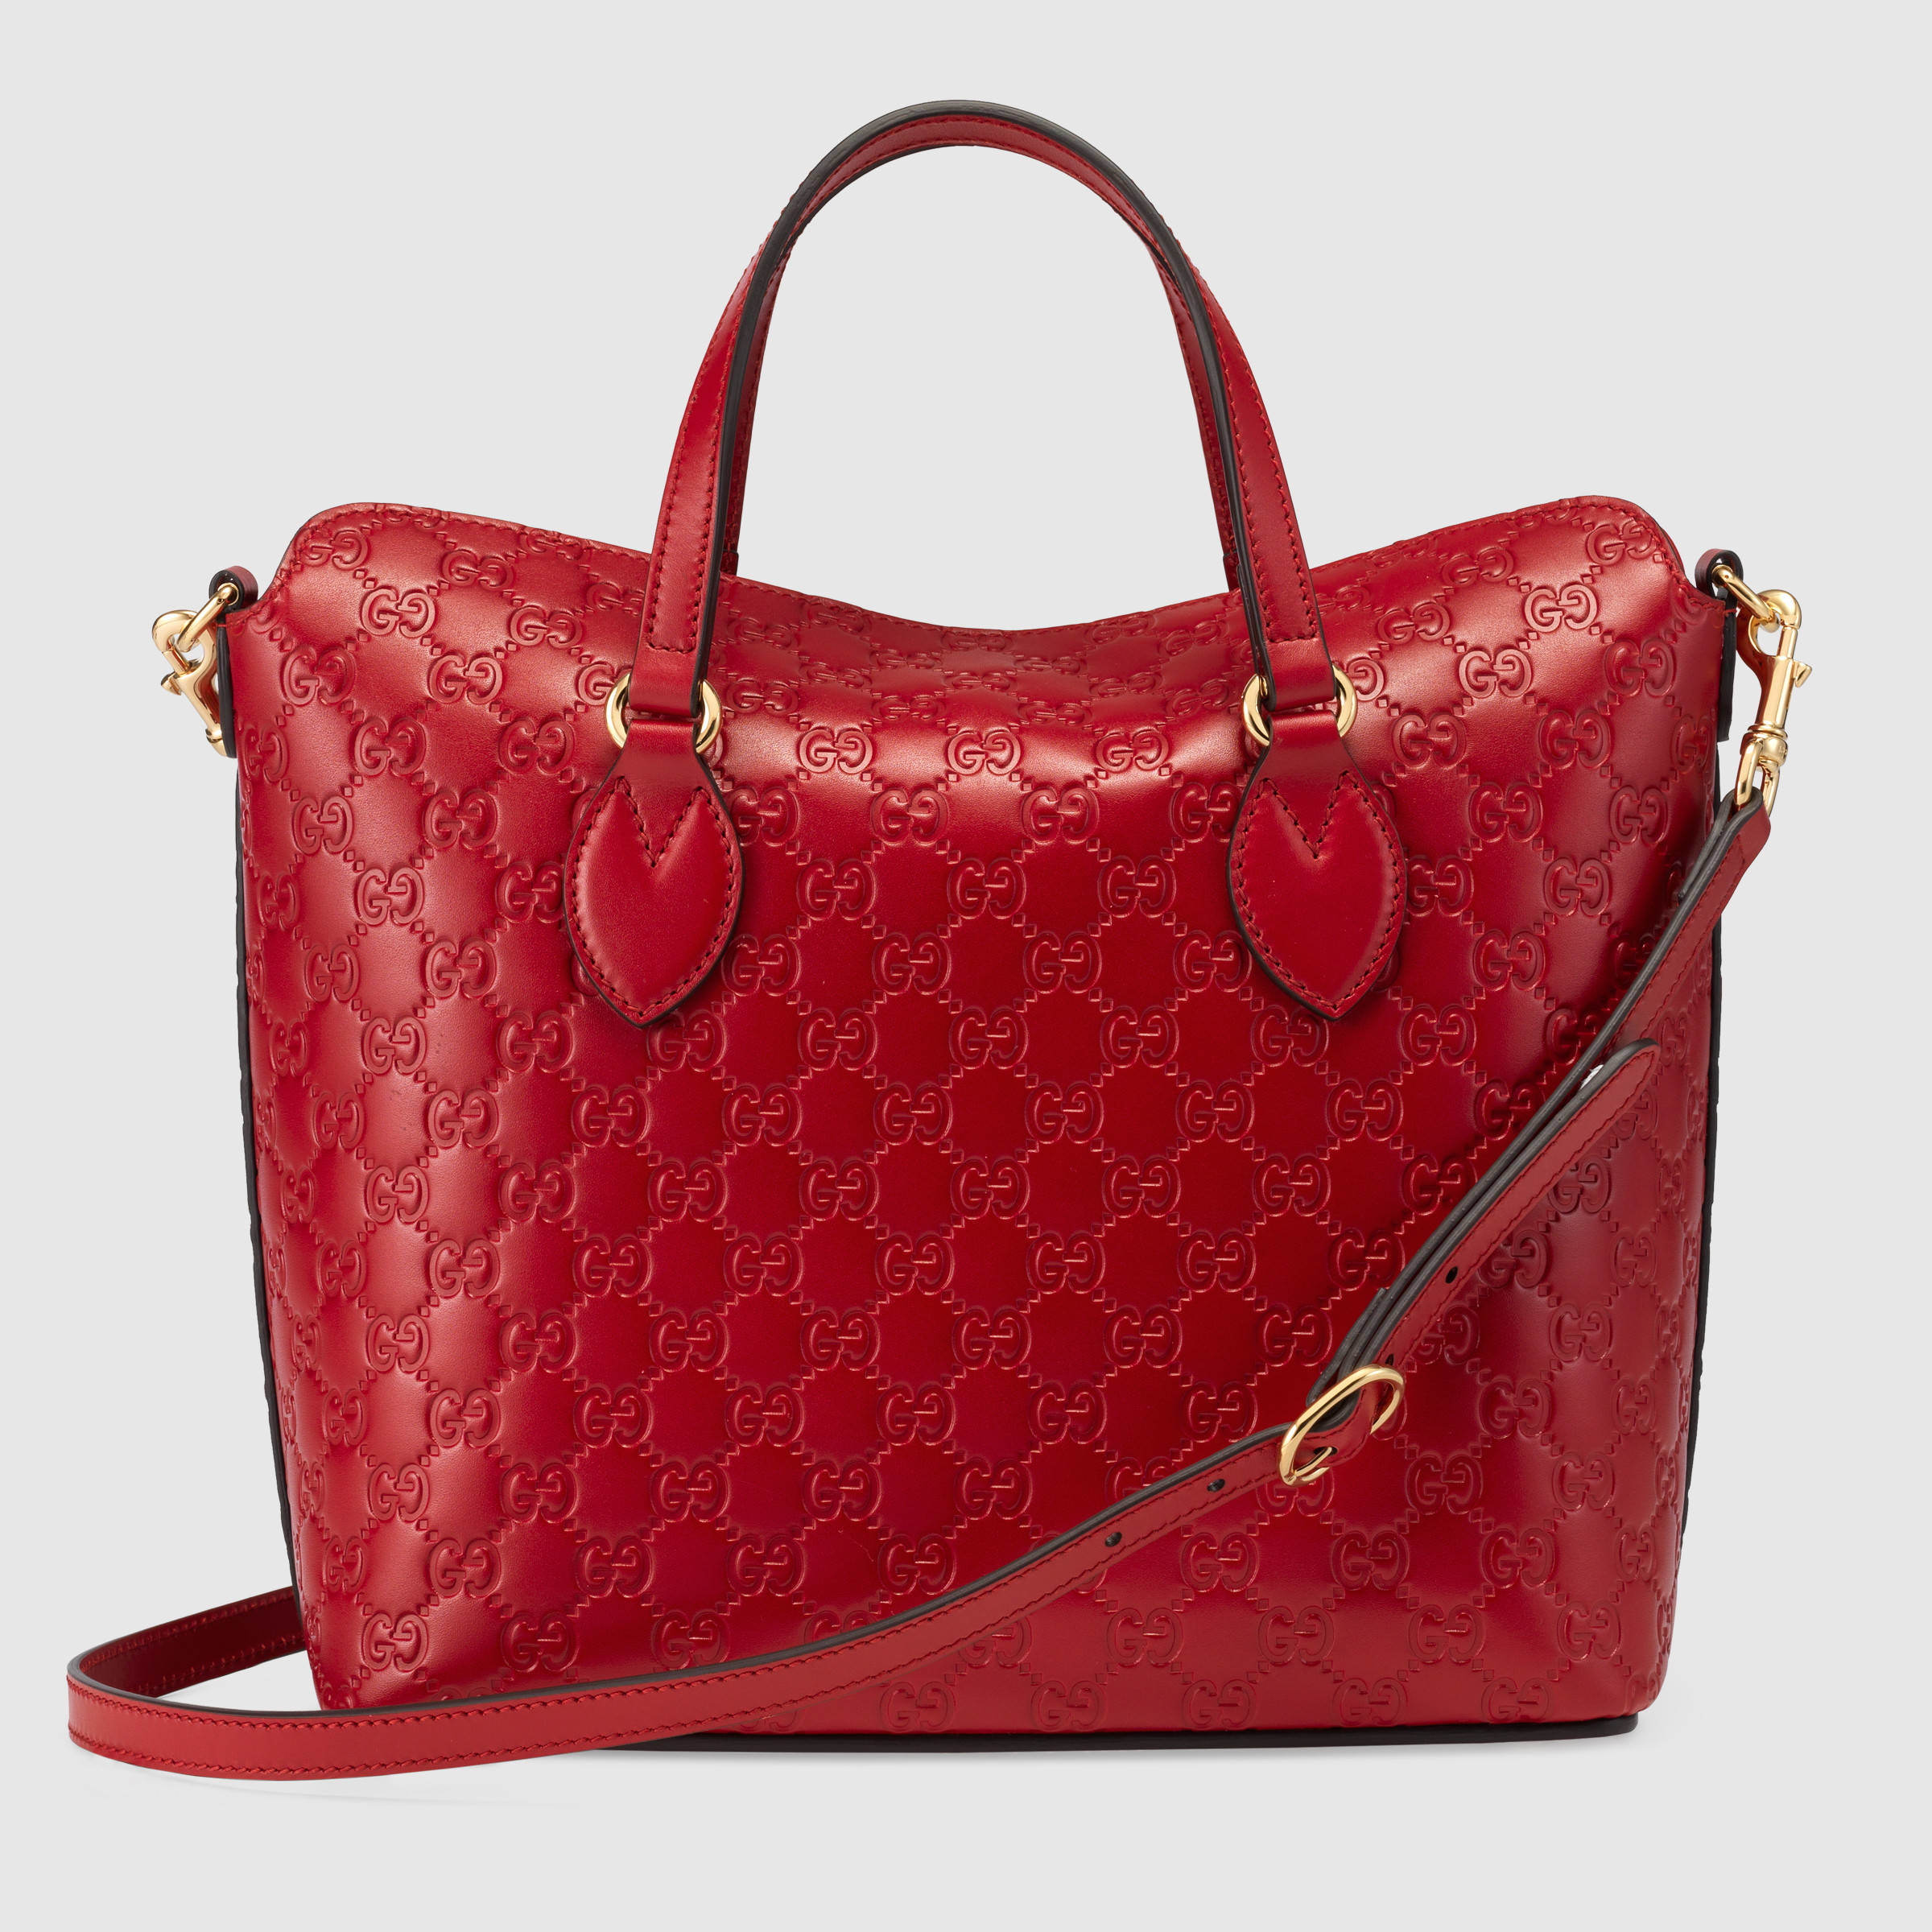 Handbags Gucci Information About | semashow.com